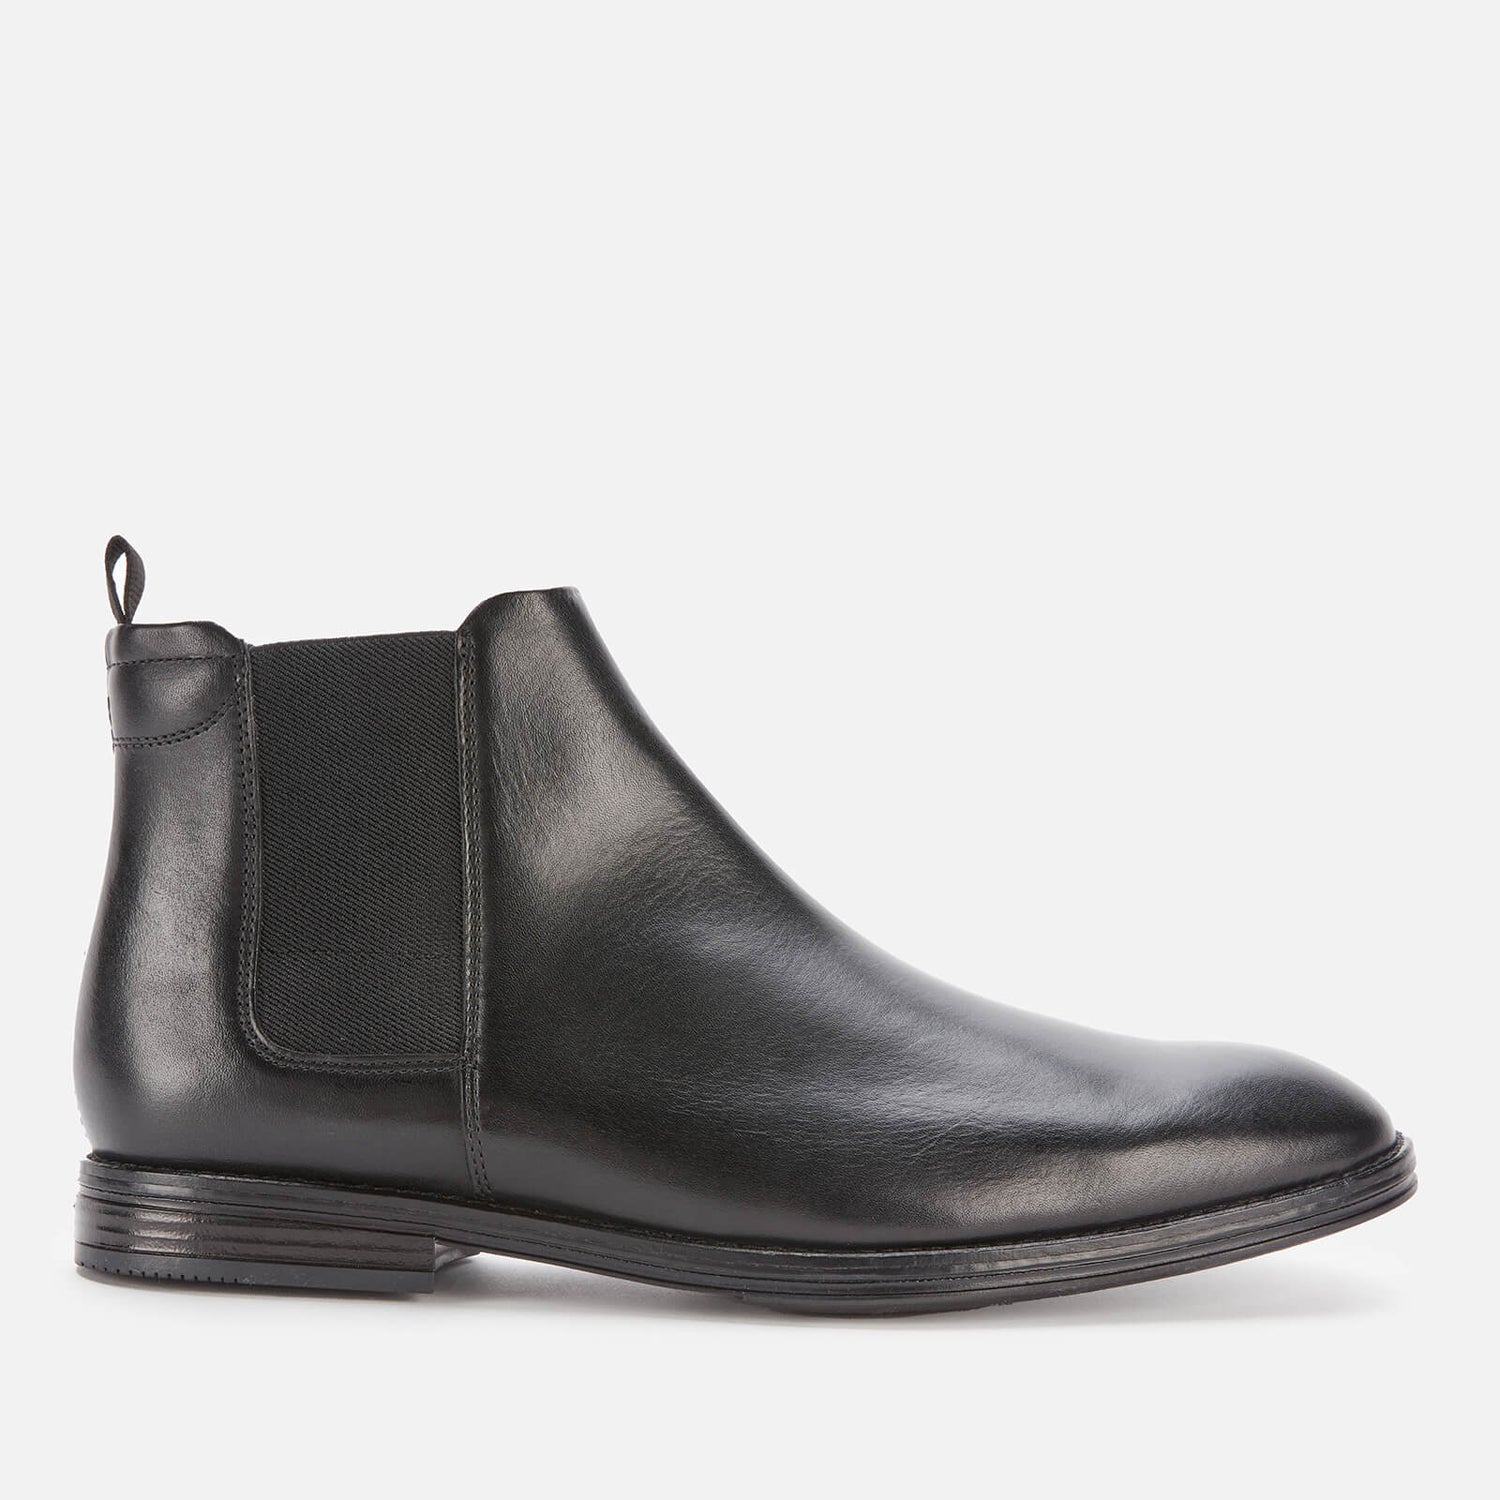 Clarks Men's Citi Stride Leather Chelsea Boots - Black